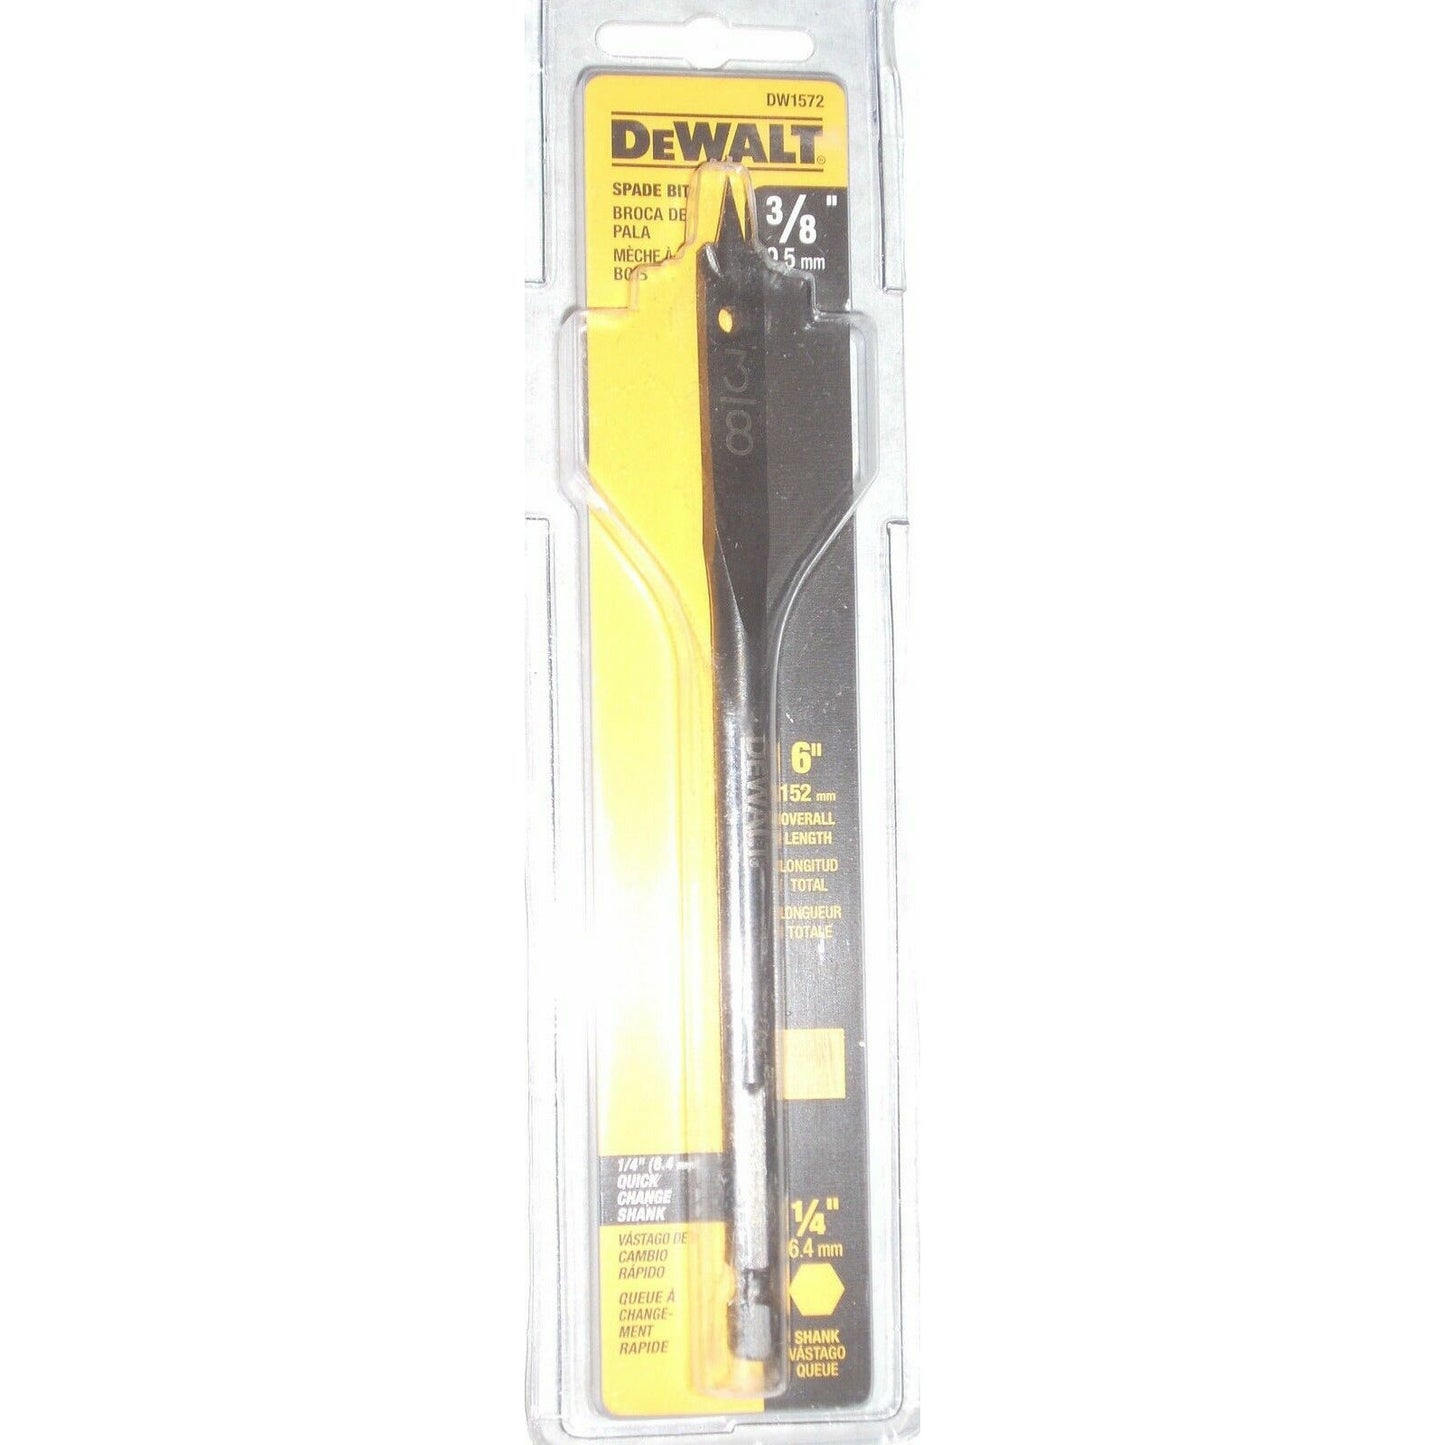 Dewalt DW1572 3/8" Spade Drill Bits 6" Long 1/4" Hex Drive